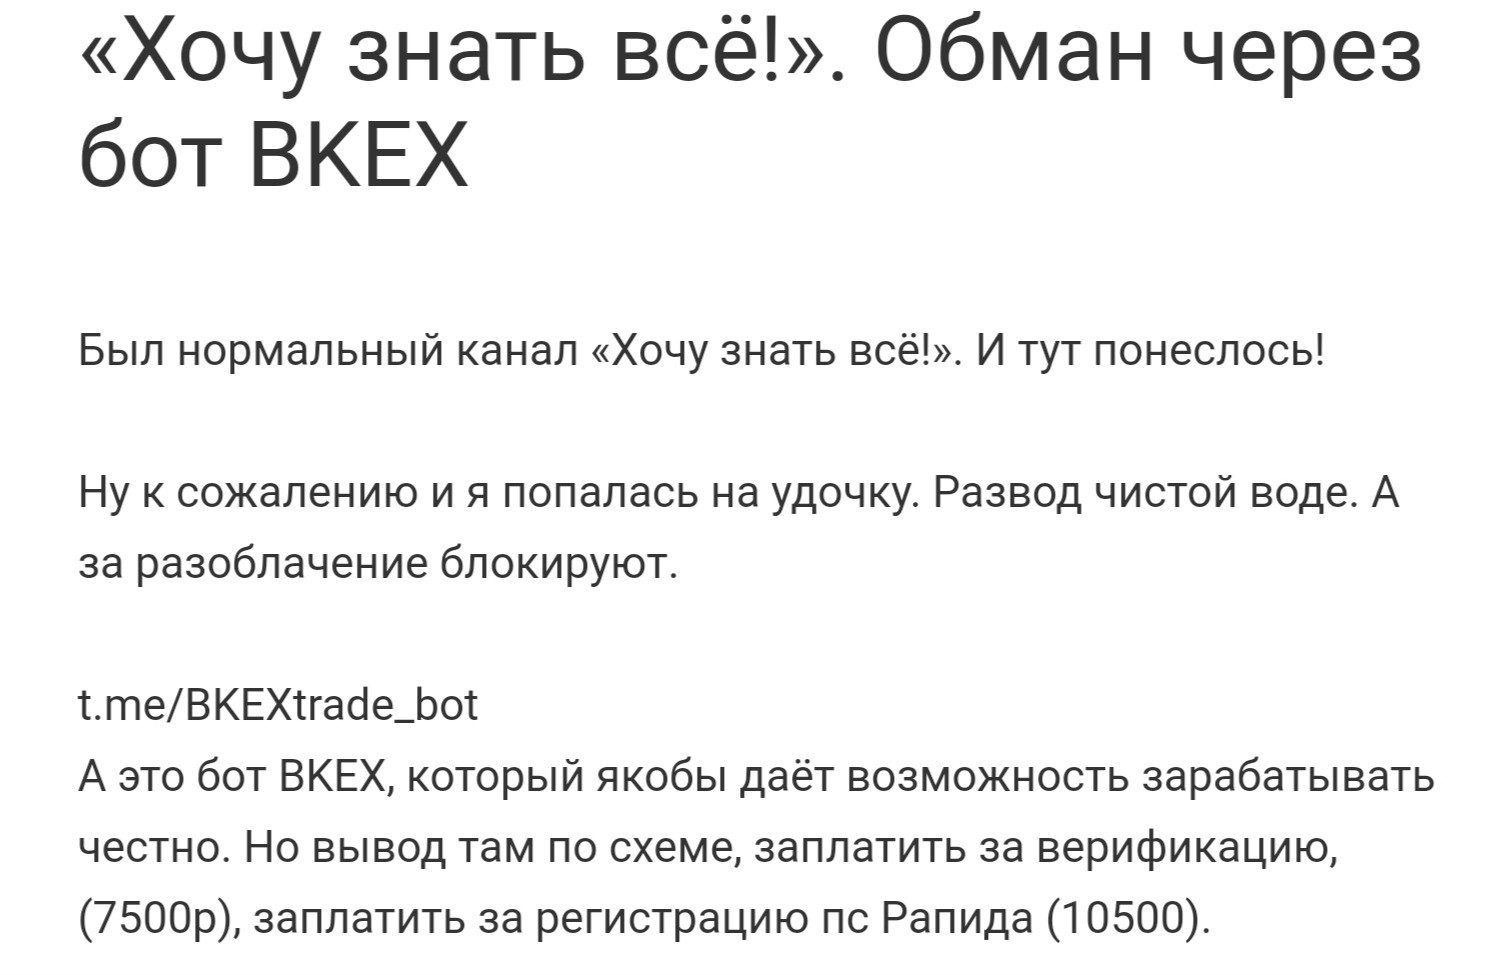 BKEX Телеграмм бот отзывы